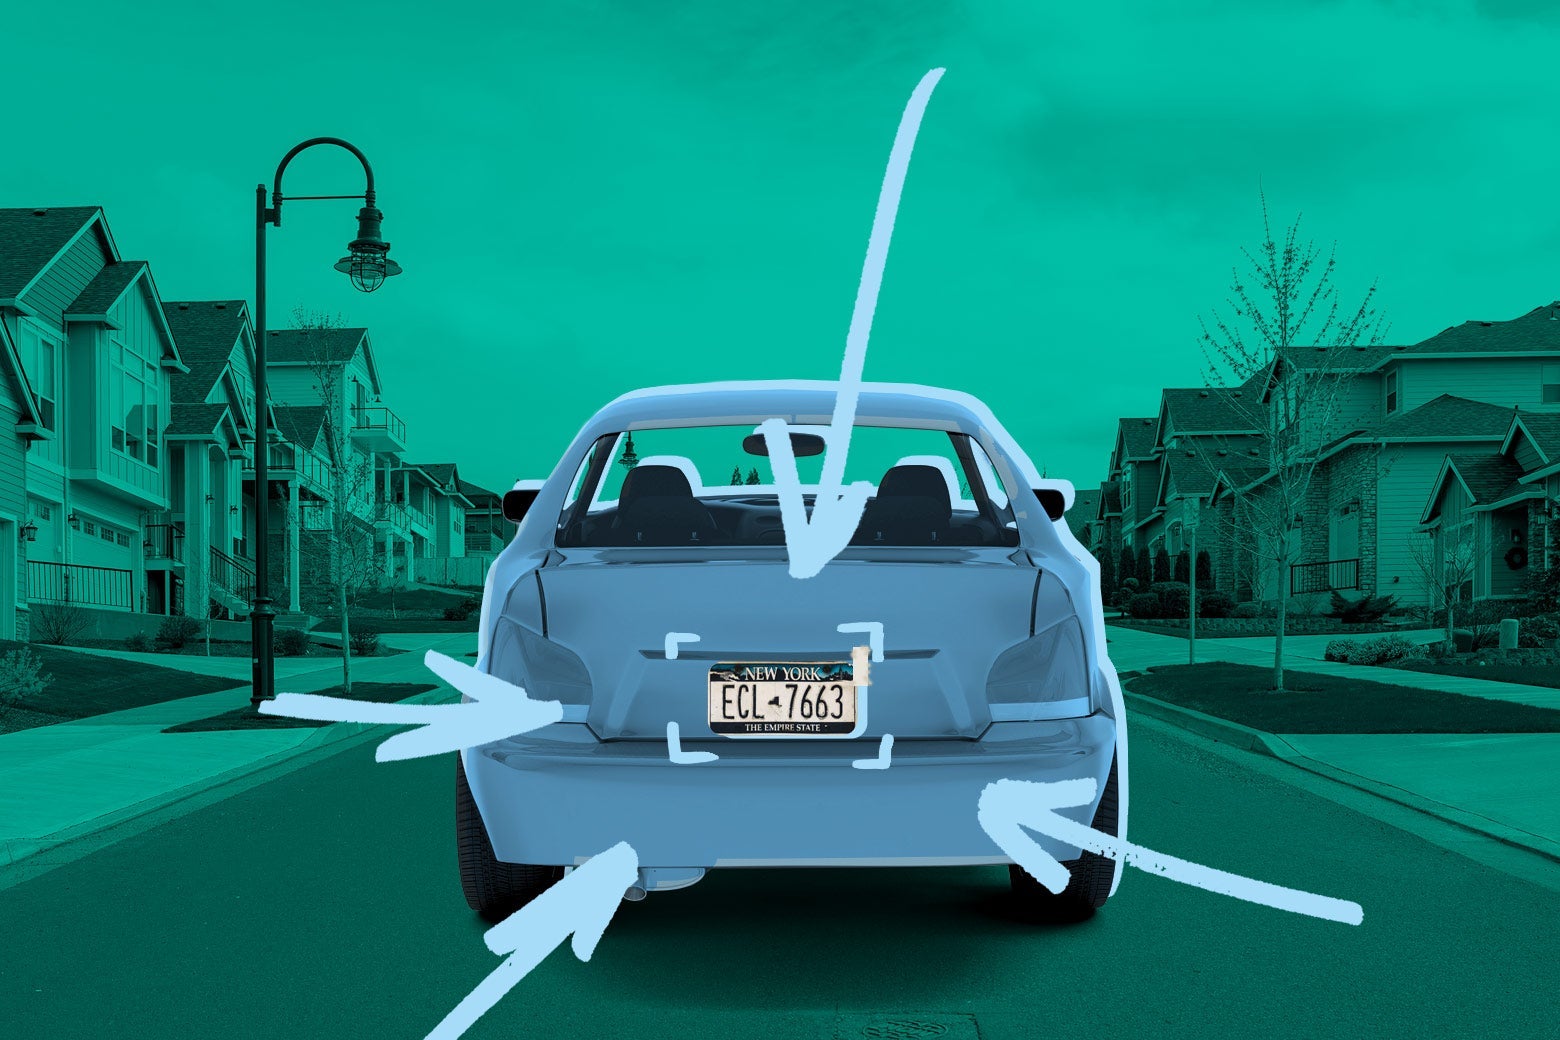 xeoma license plate recognition sensitivity